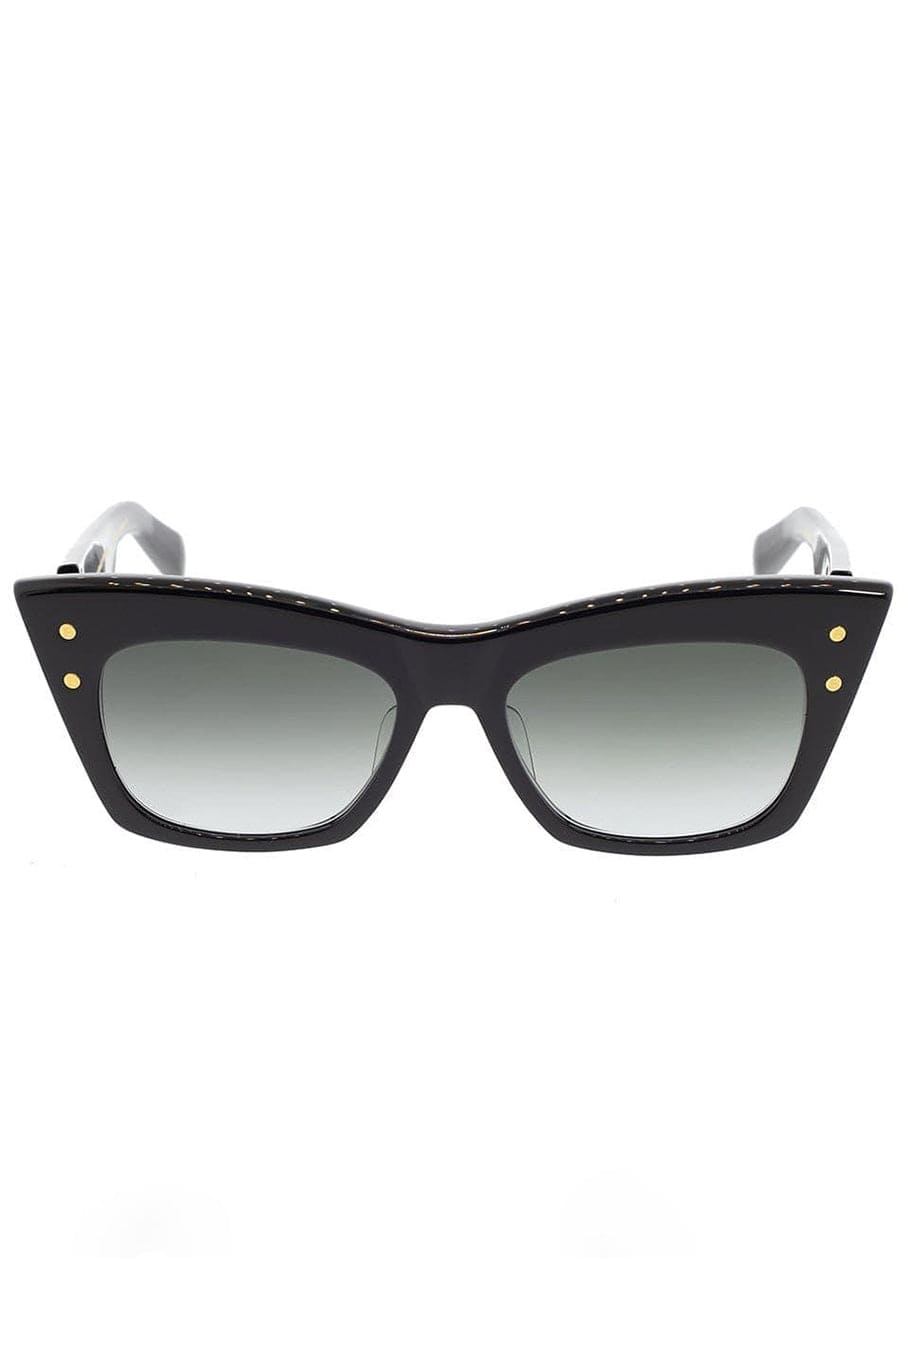 BALMAIN-Black and Gold B-II Sunglasses-BLK/GLD